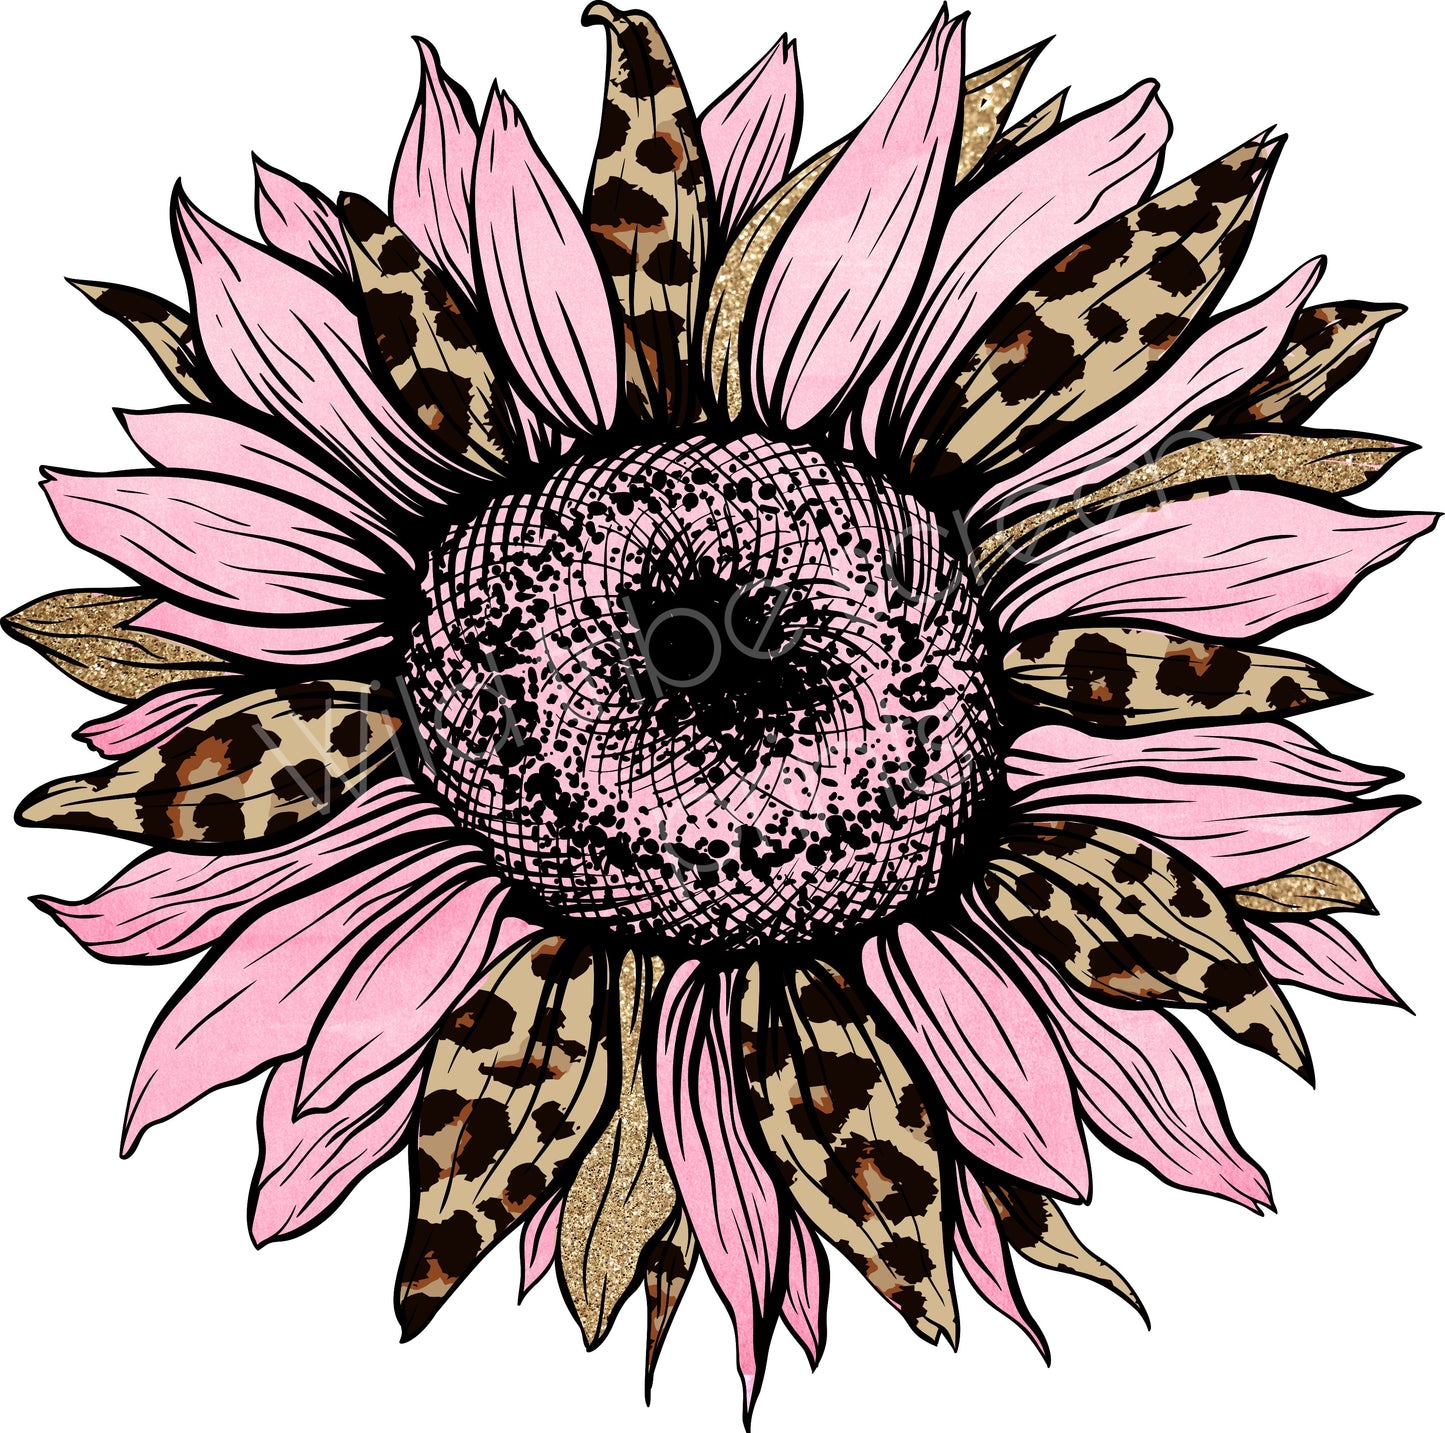 Pink sunflower